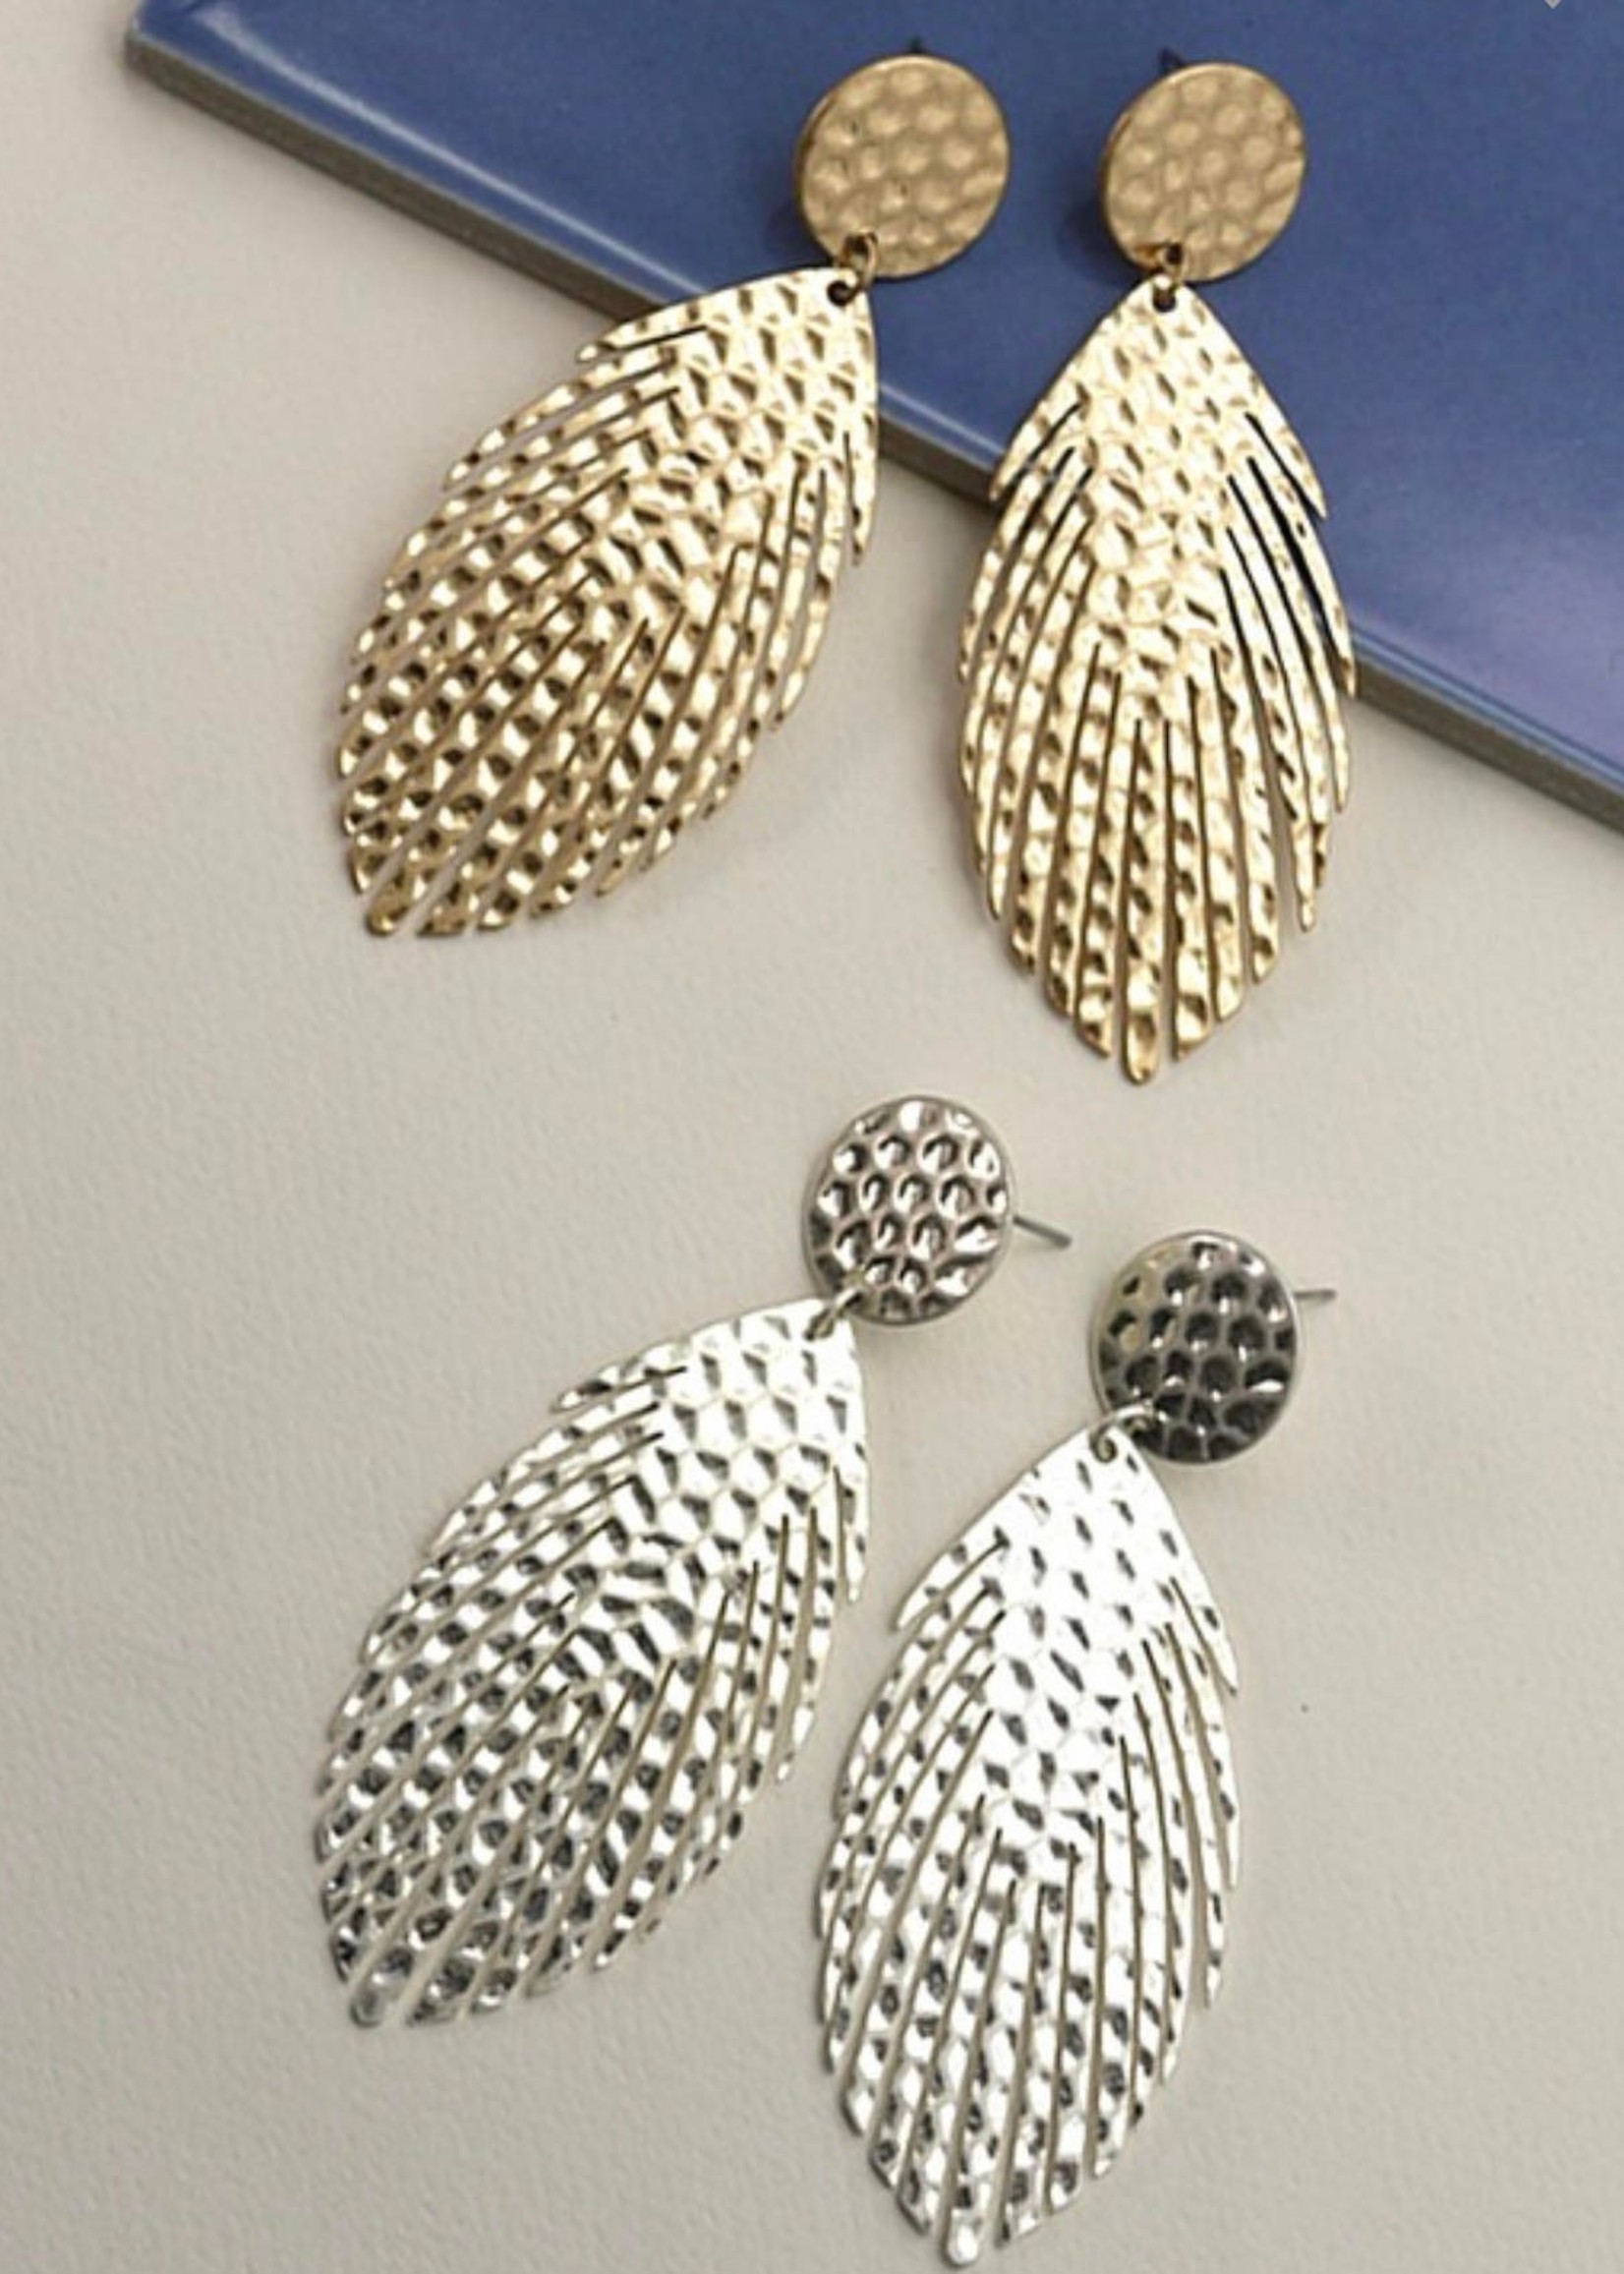 Hammered metal leaf earrings- gold or silver